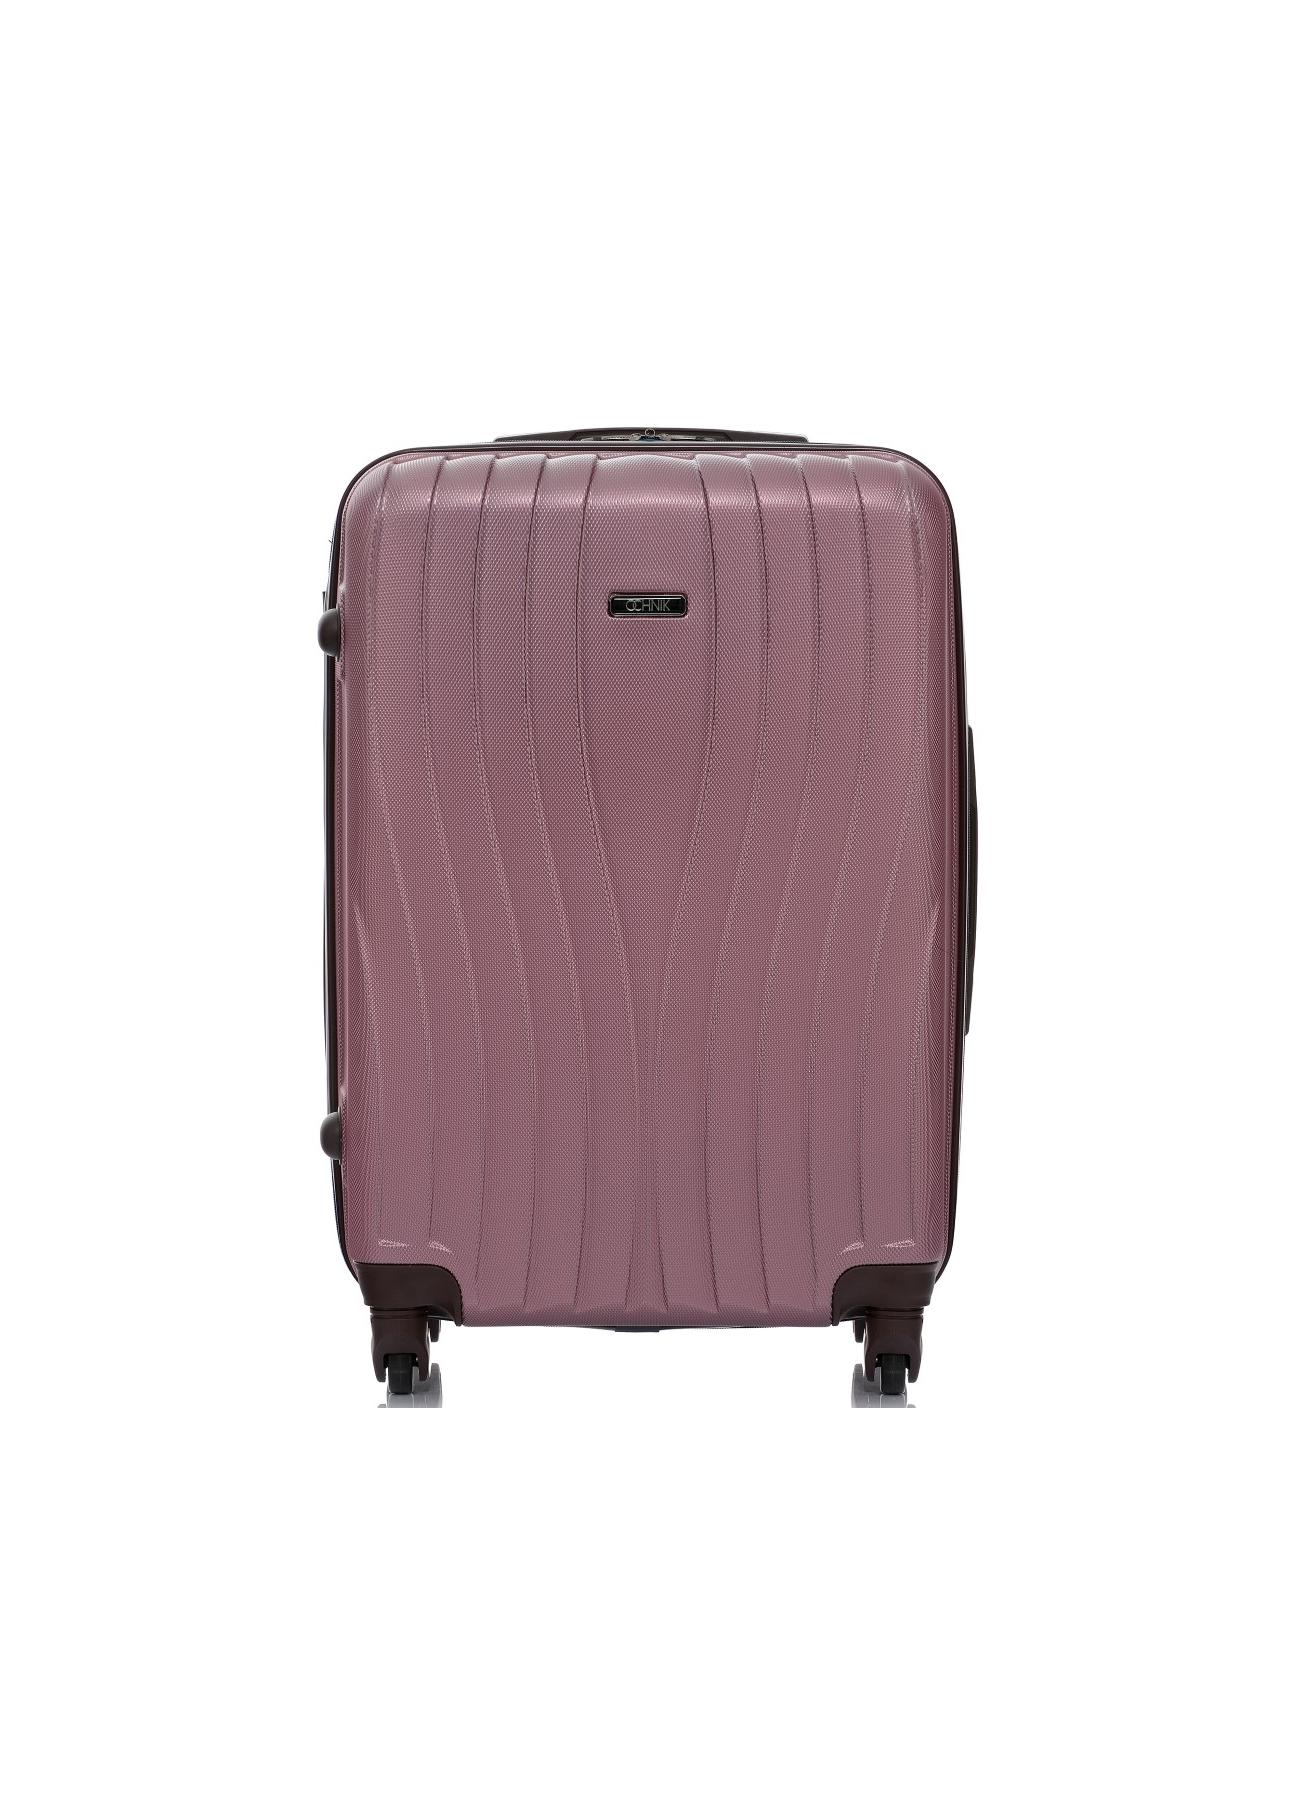 Duża walizka na kółkach WALAB-0028-31-28